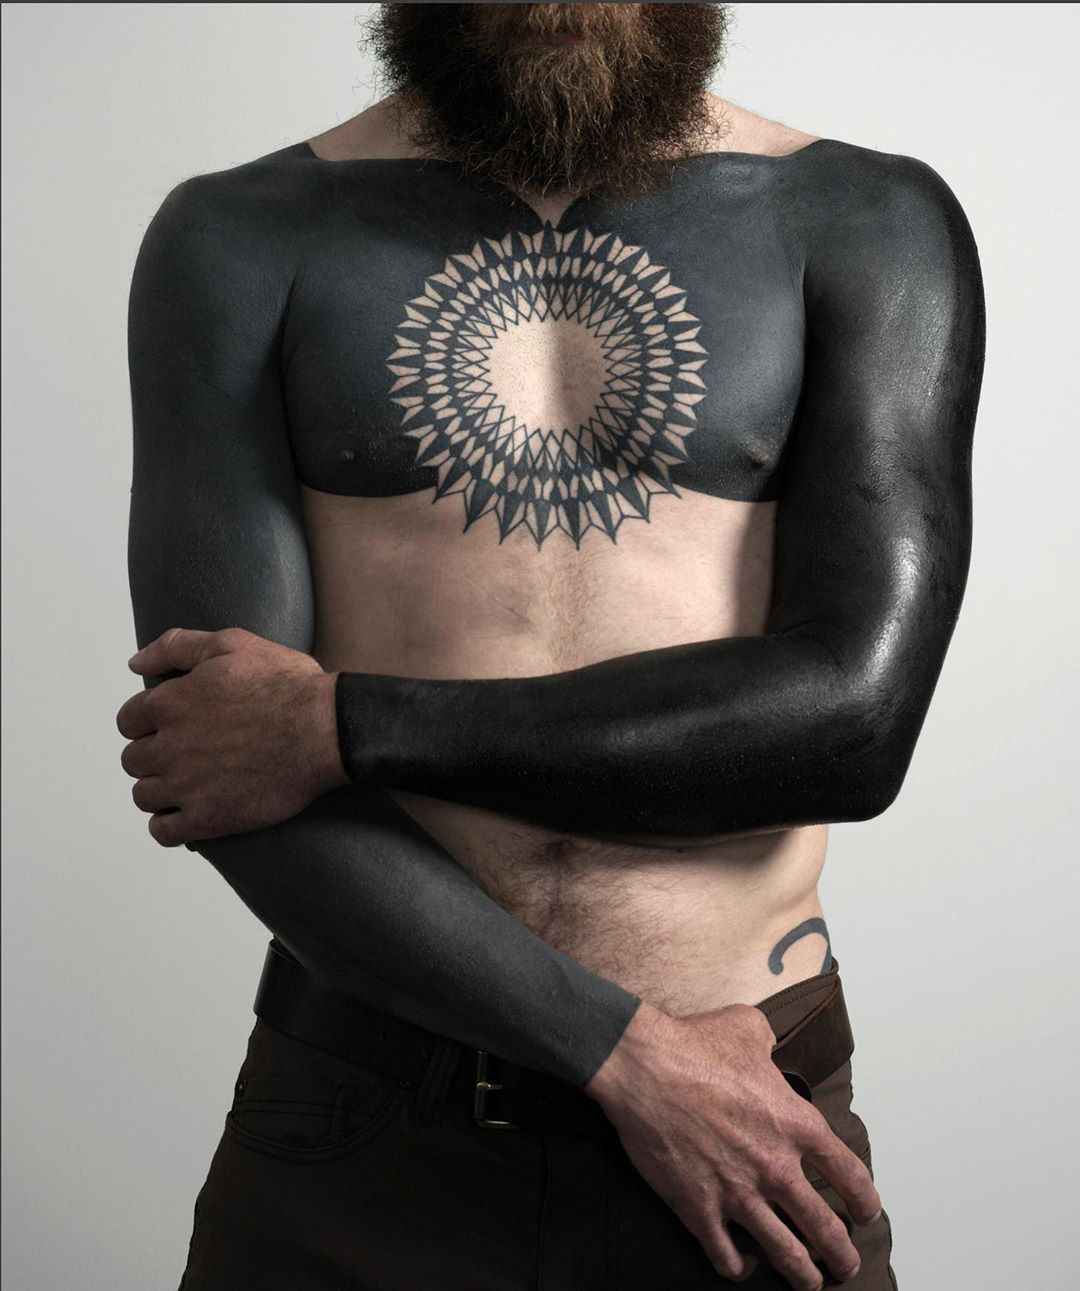 Blackwork A Full Body Blackout With Cosmos, Tattoo Idea - BlackInk AI